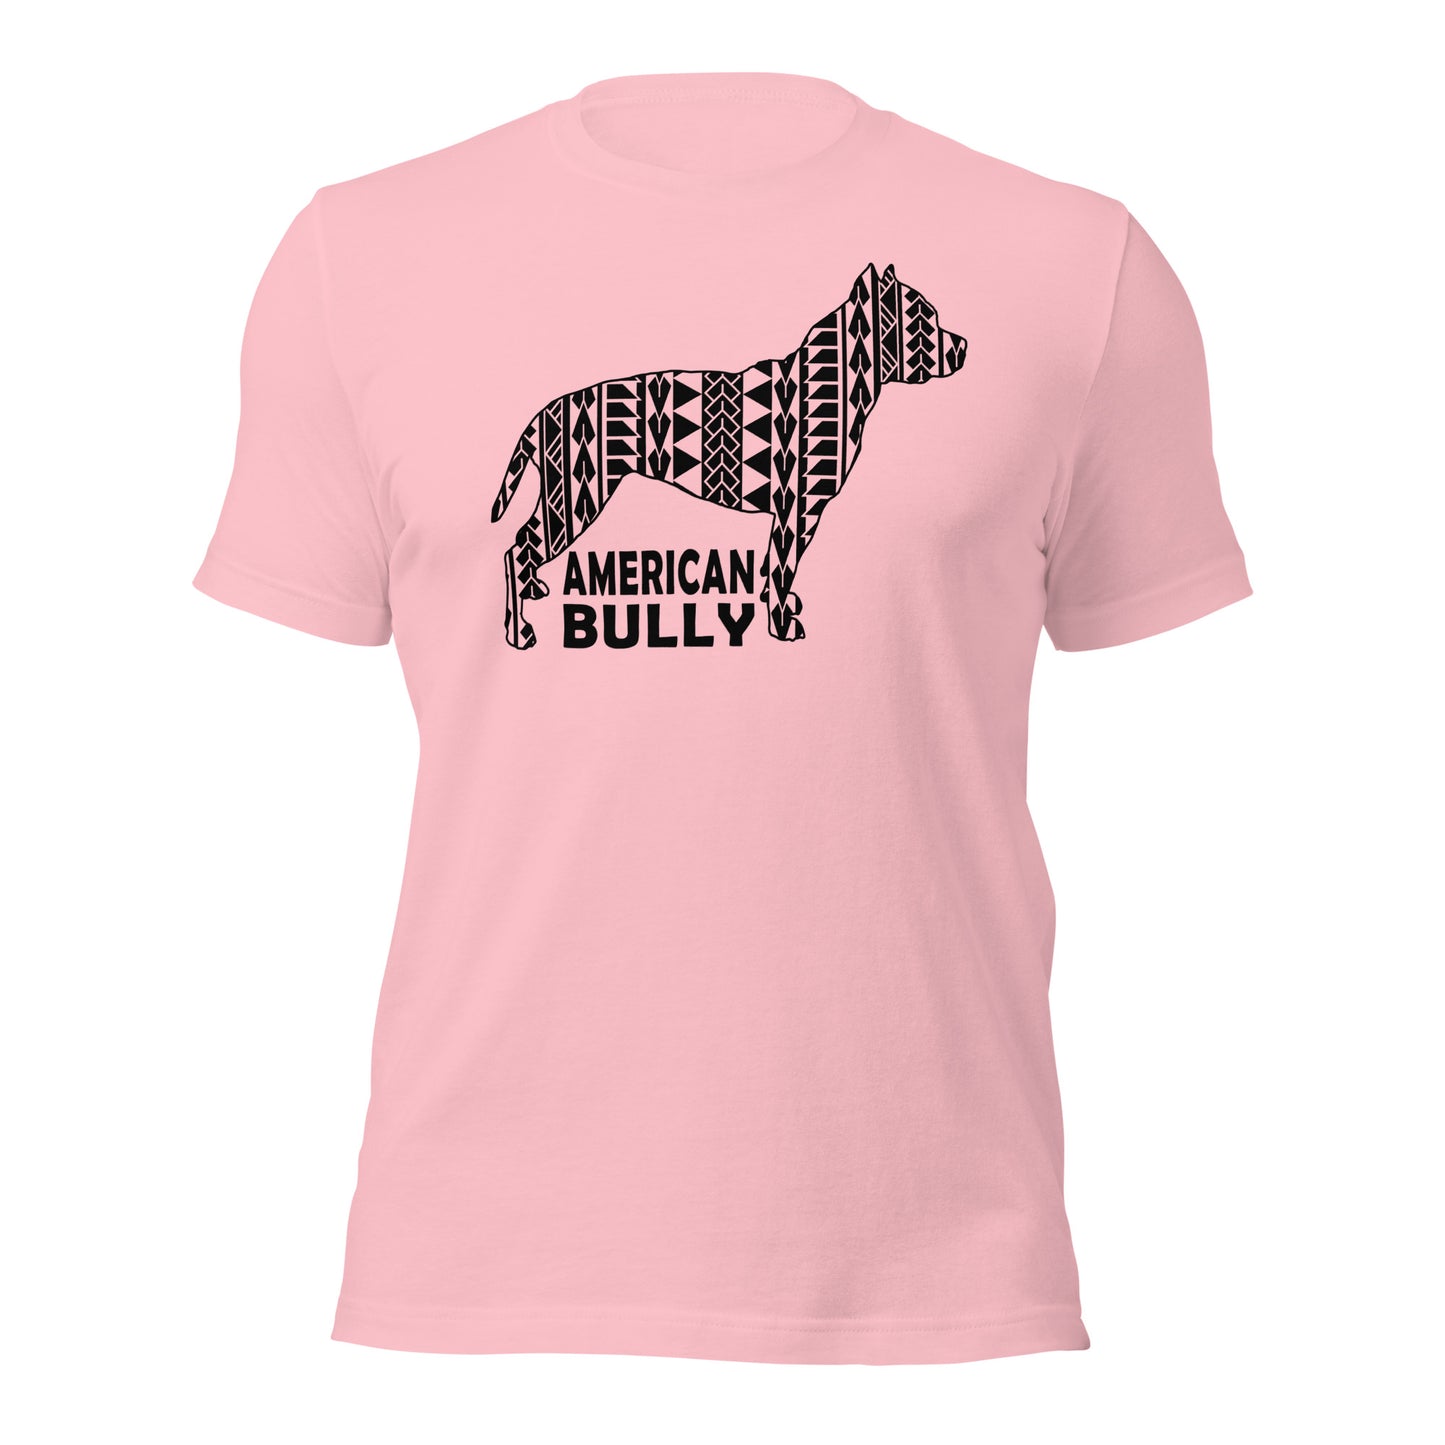 American Bully Polynesian t-shirt pink by Dog Artistry.